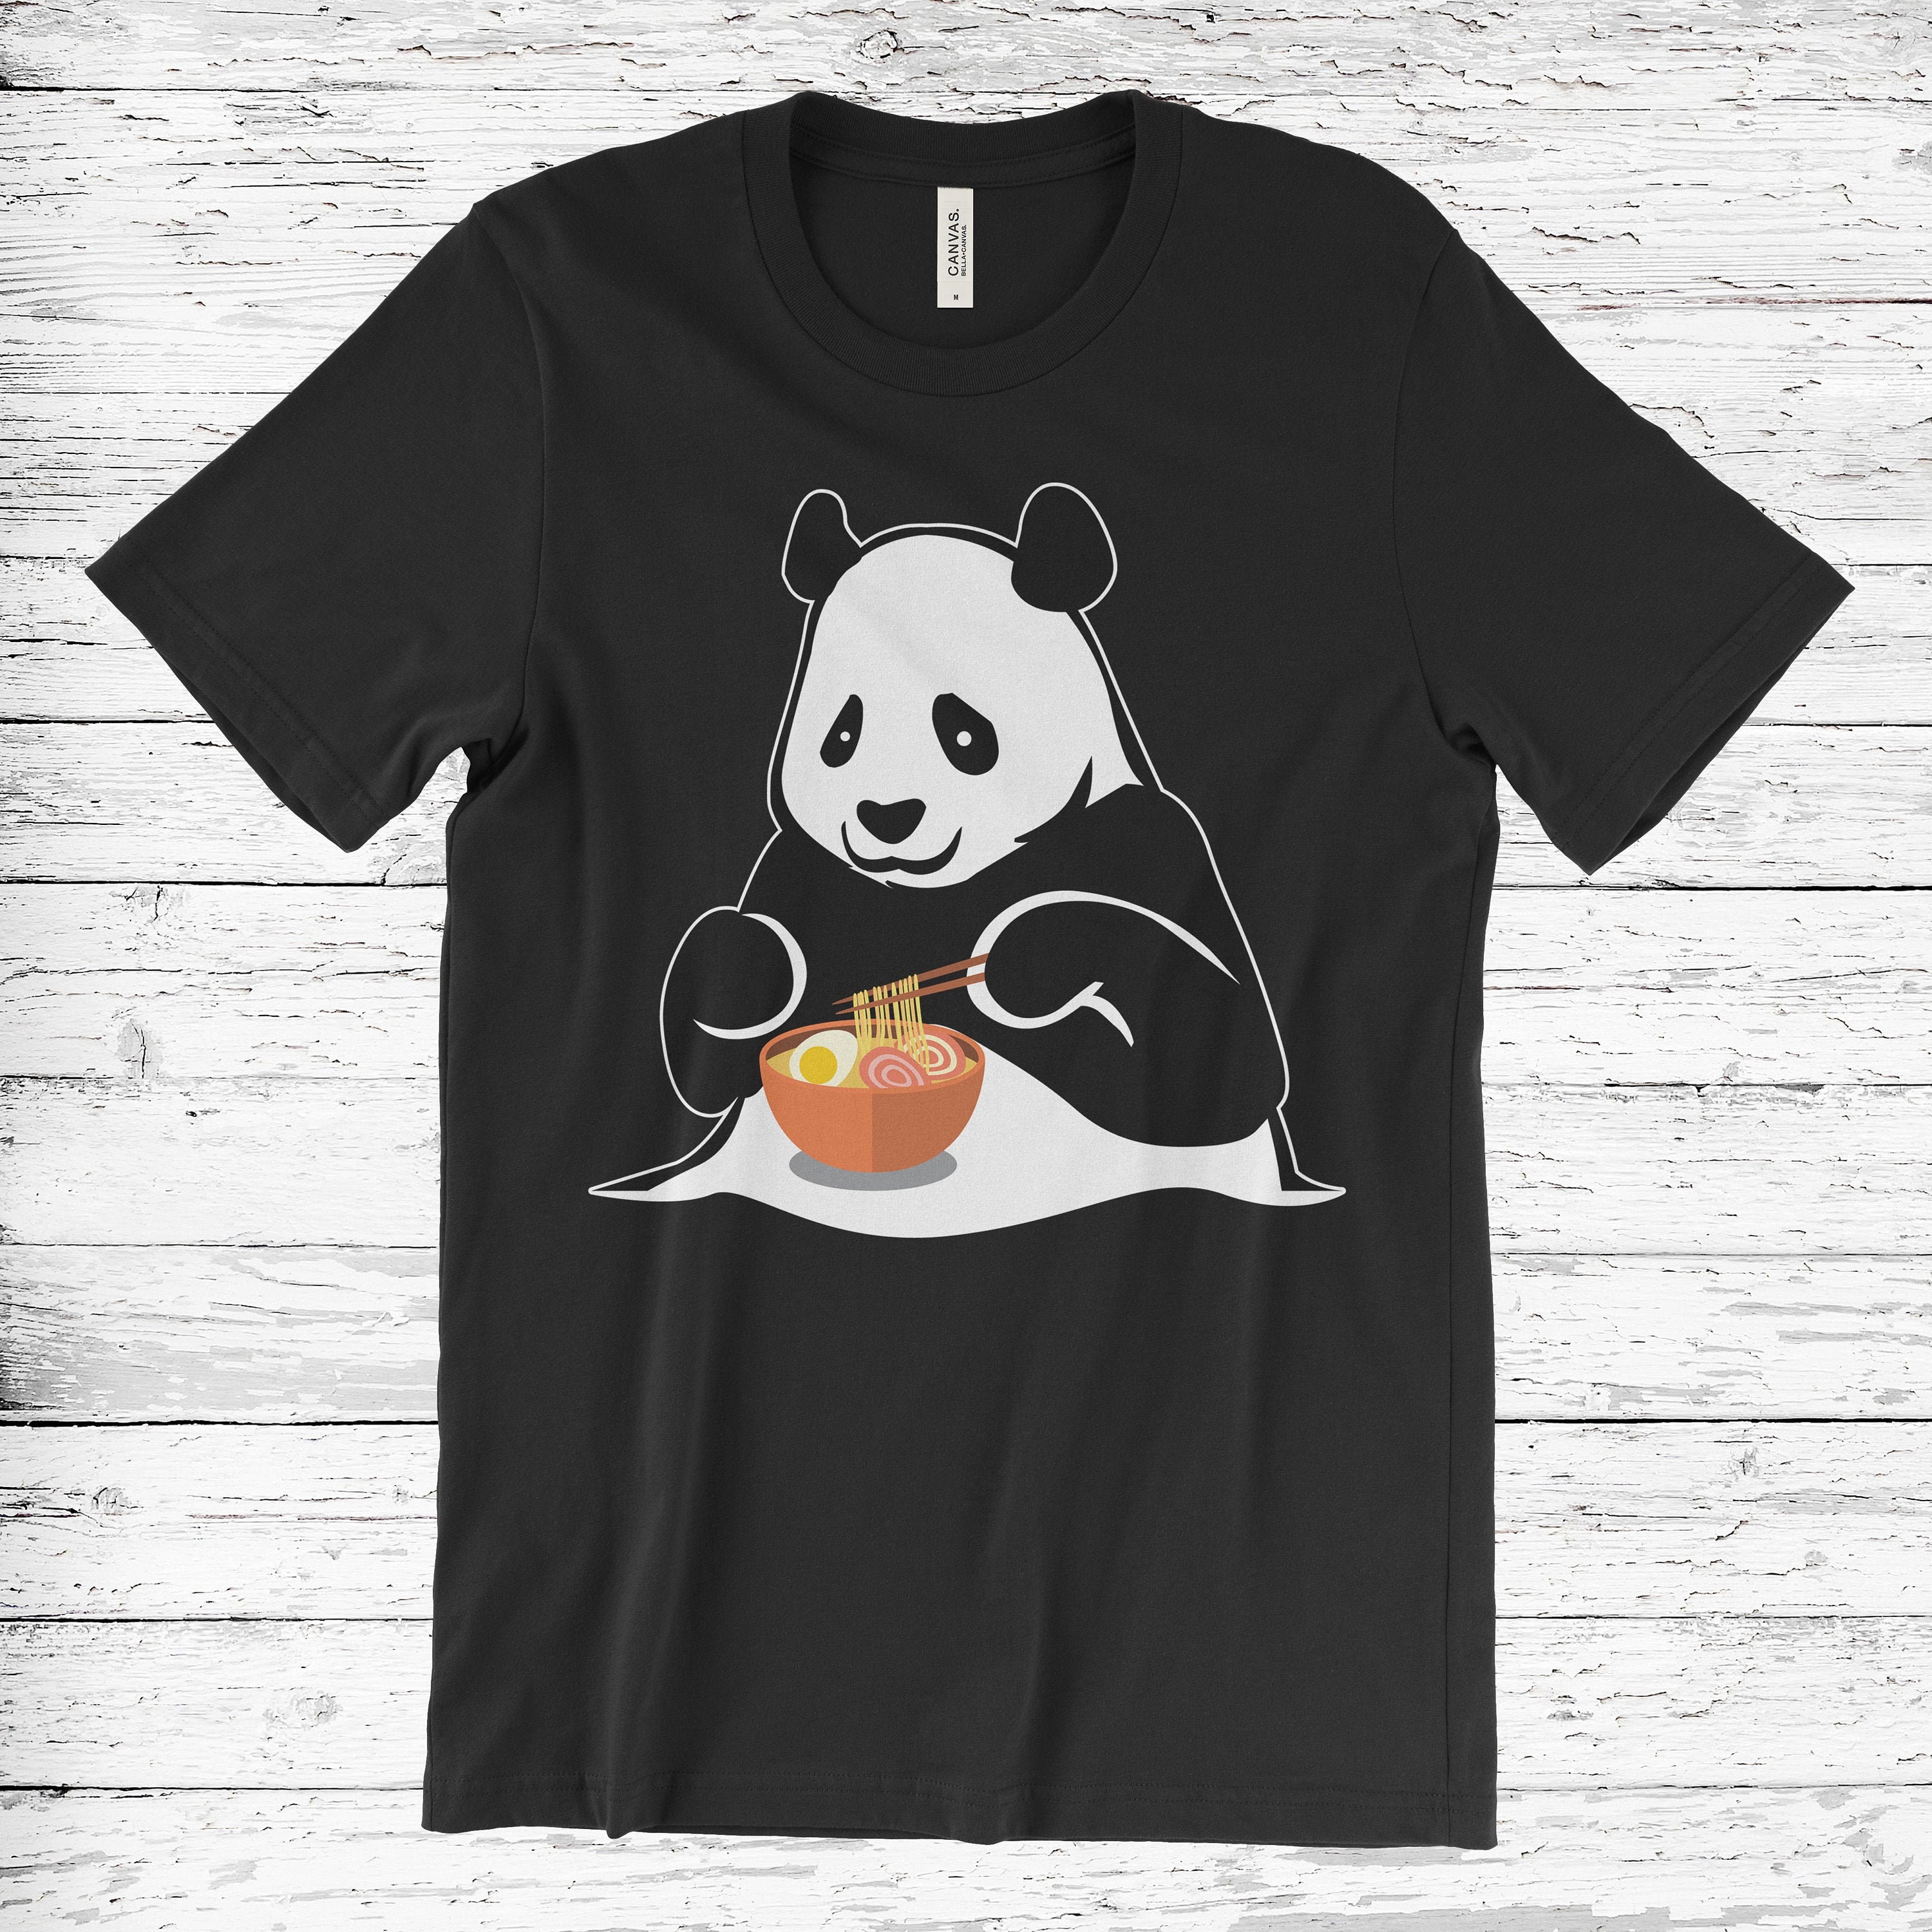 Funny Ramen Shirt, I Love Japanese Noodles Tank Top, Cute Asian Food Crop Tee, Panda Foodie Lover T Shirts, Ramens Bowl Gifts Party Present